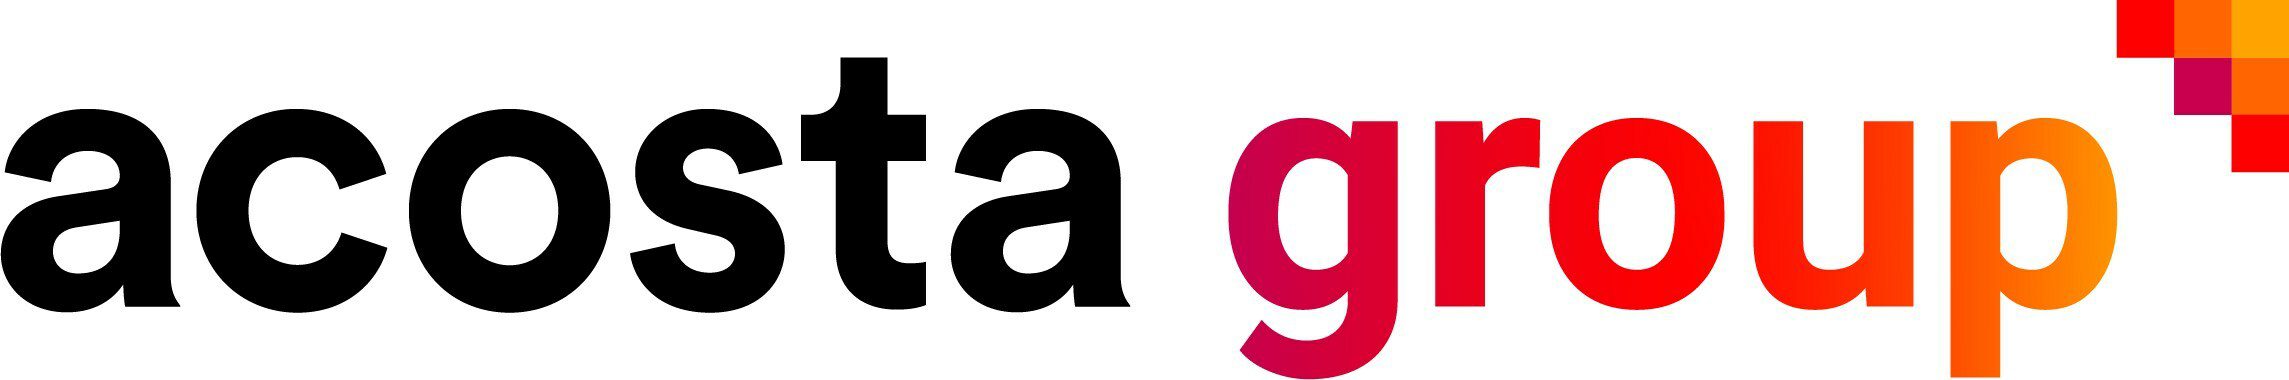 Acosta-Group Logo